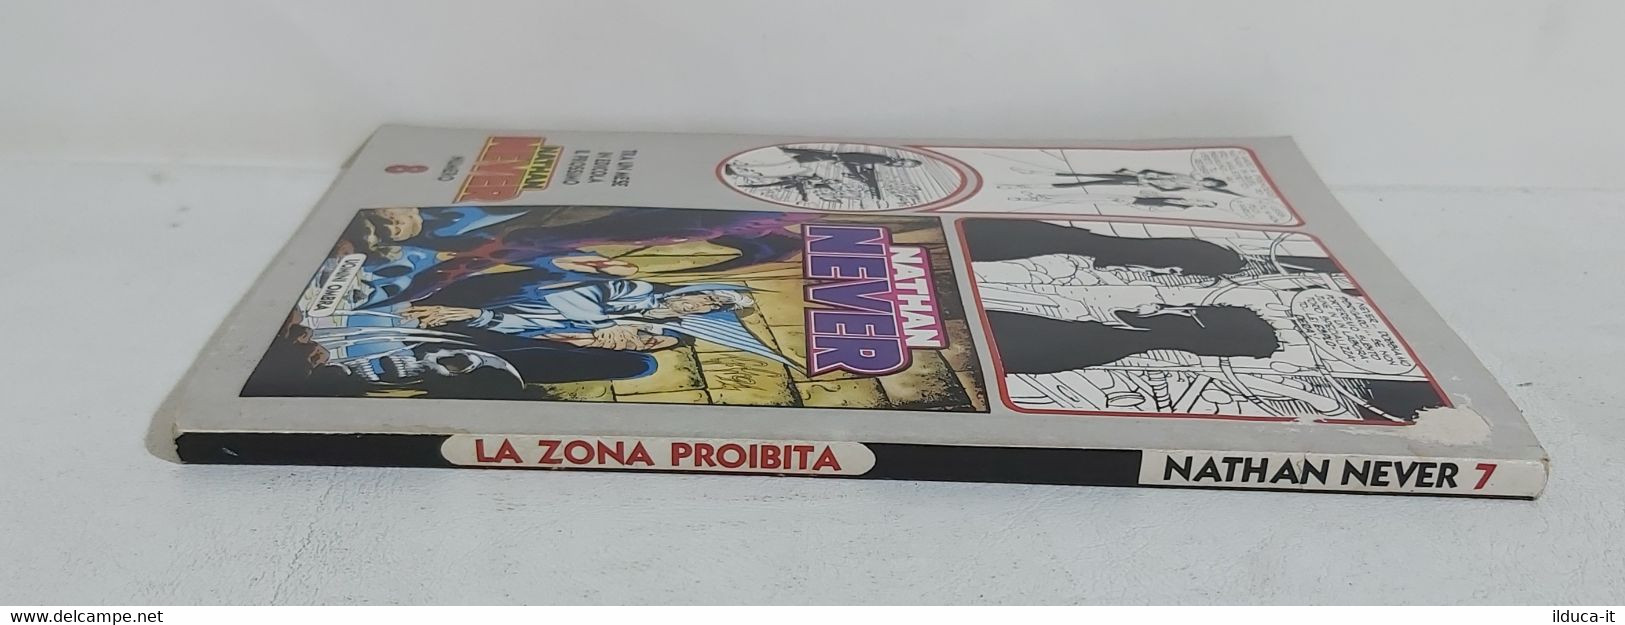 I104887 NATHAN NEVER N. 7 - La Zona Proibita - Bonelli 1991 - Bonelli